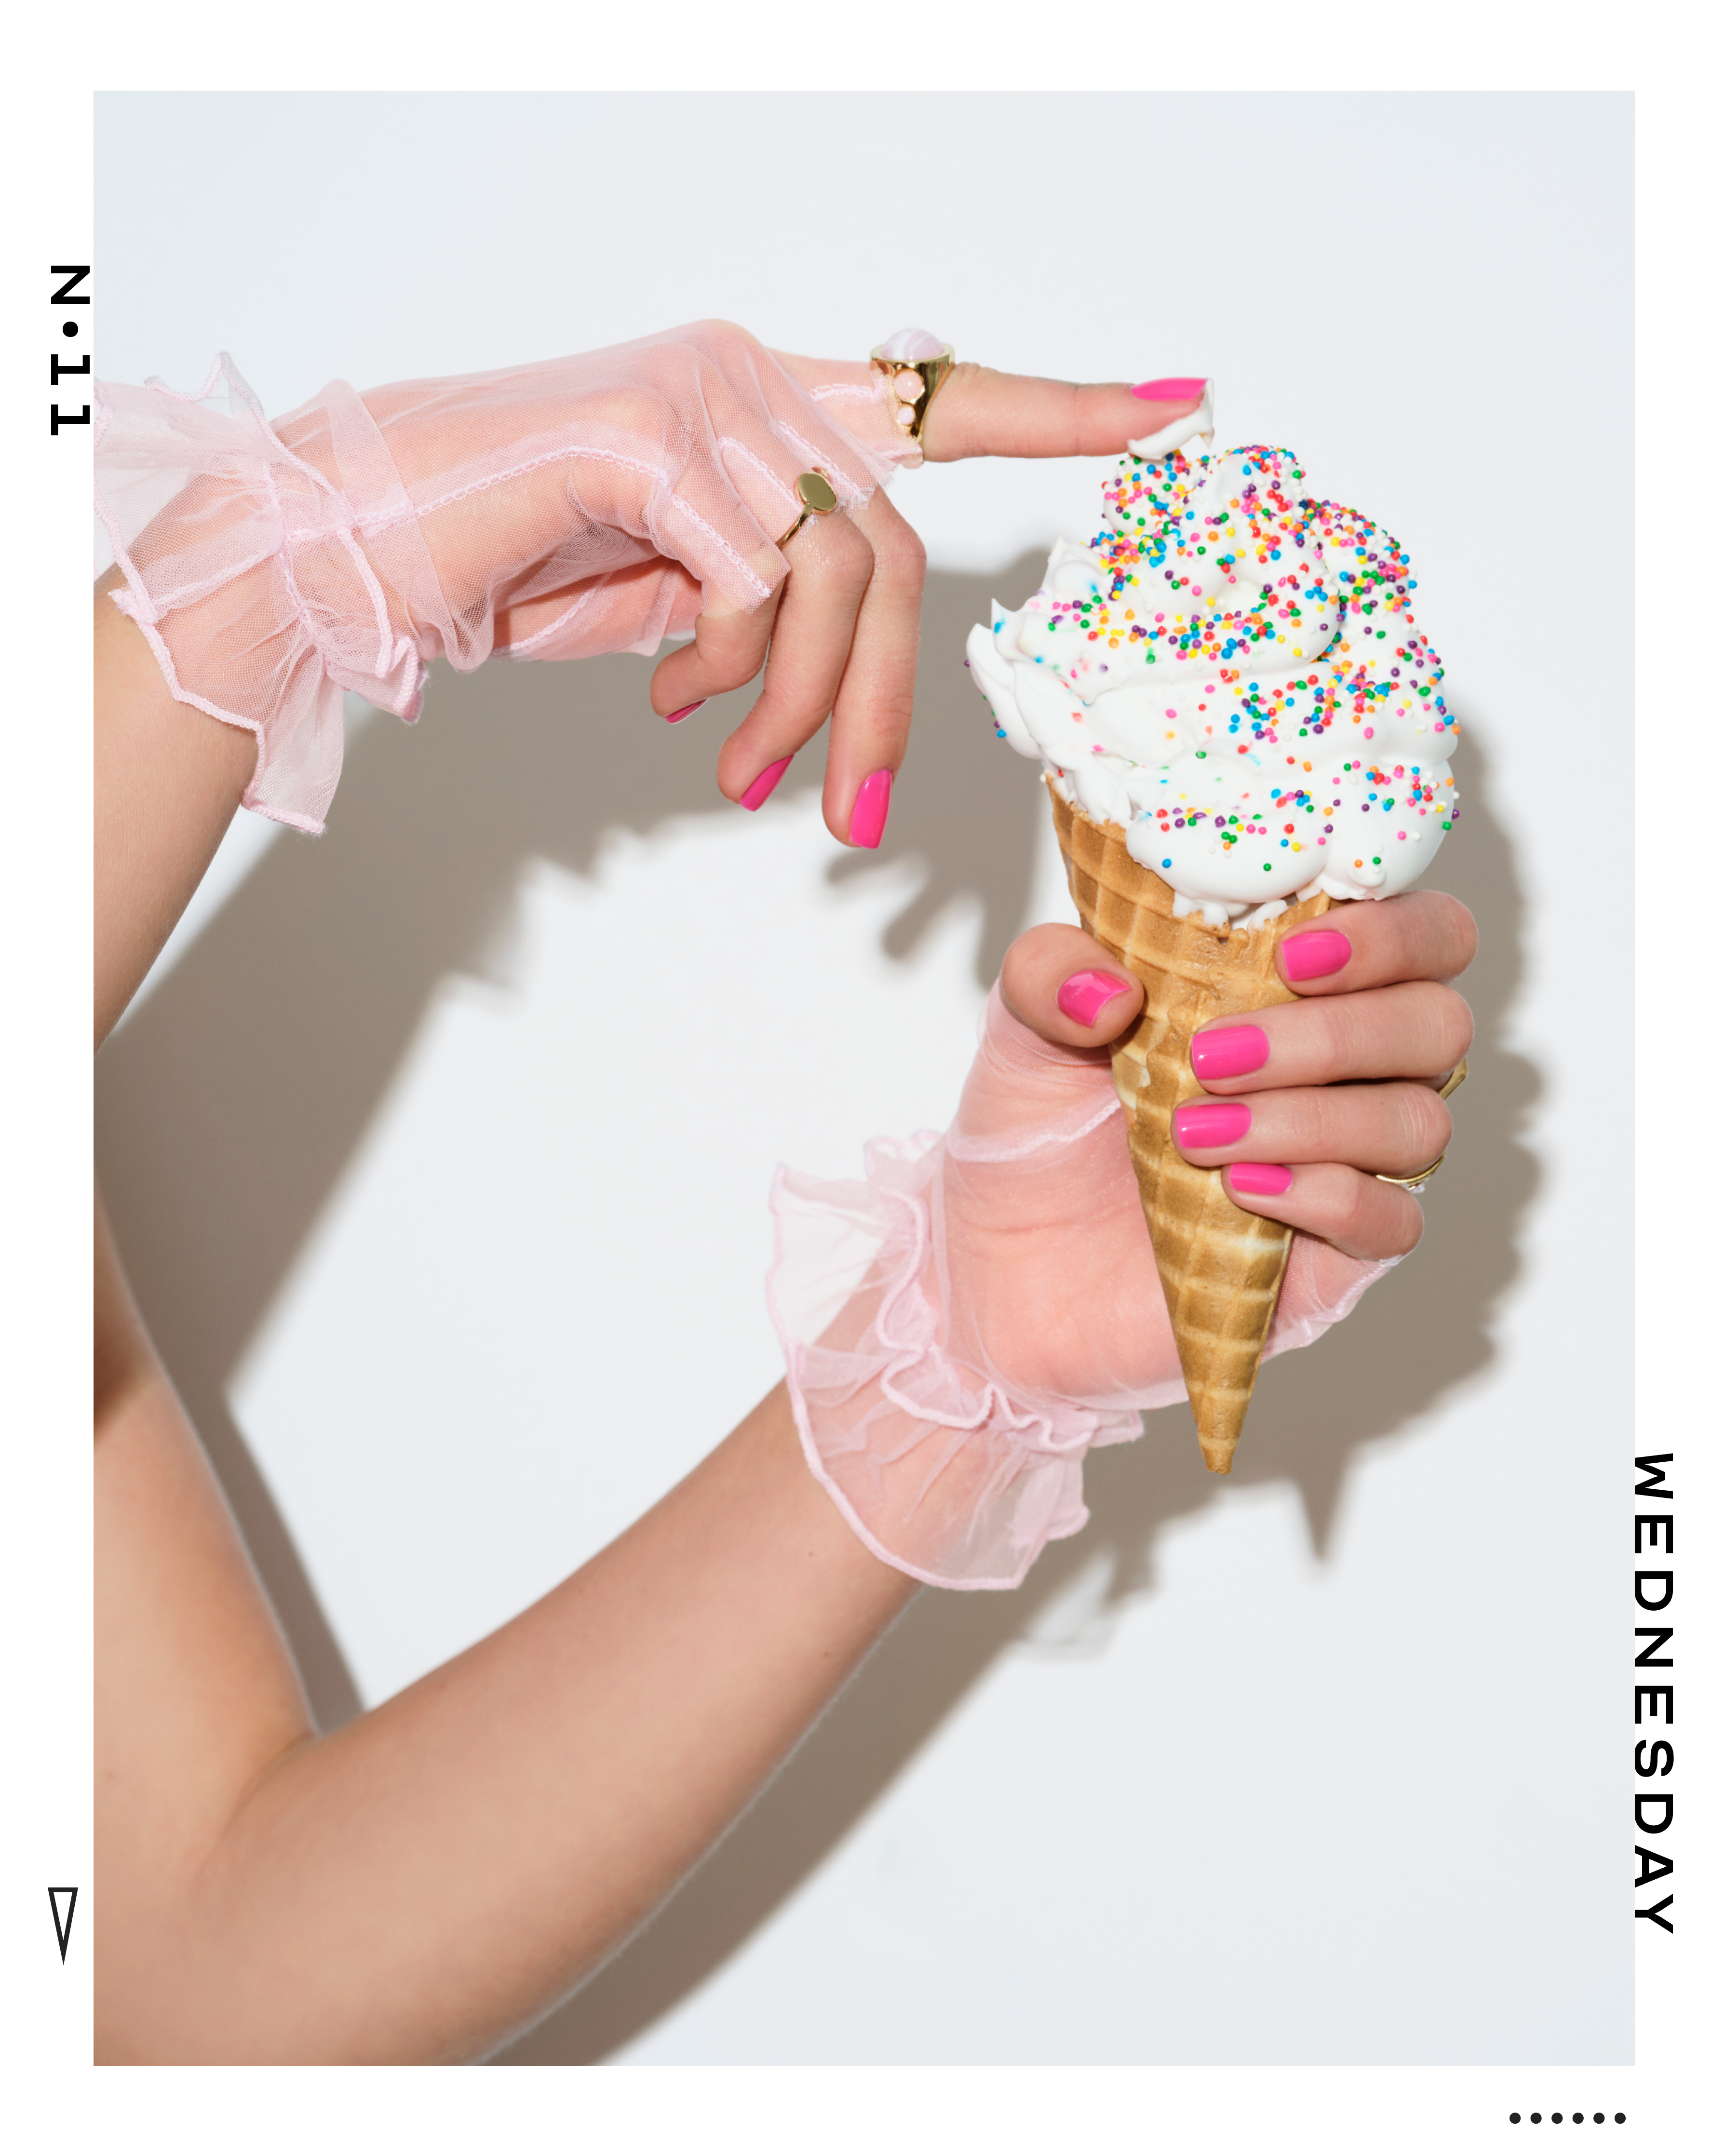 wednesday nail polish with ice cream cone